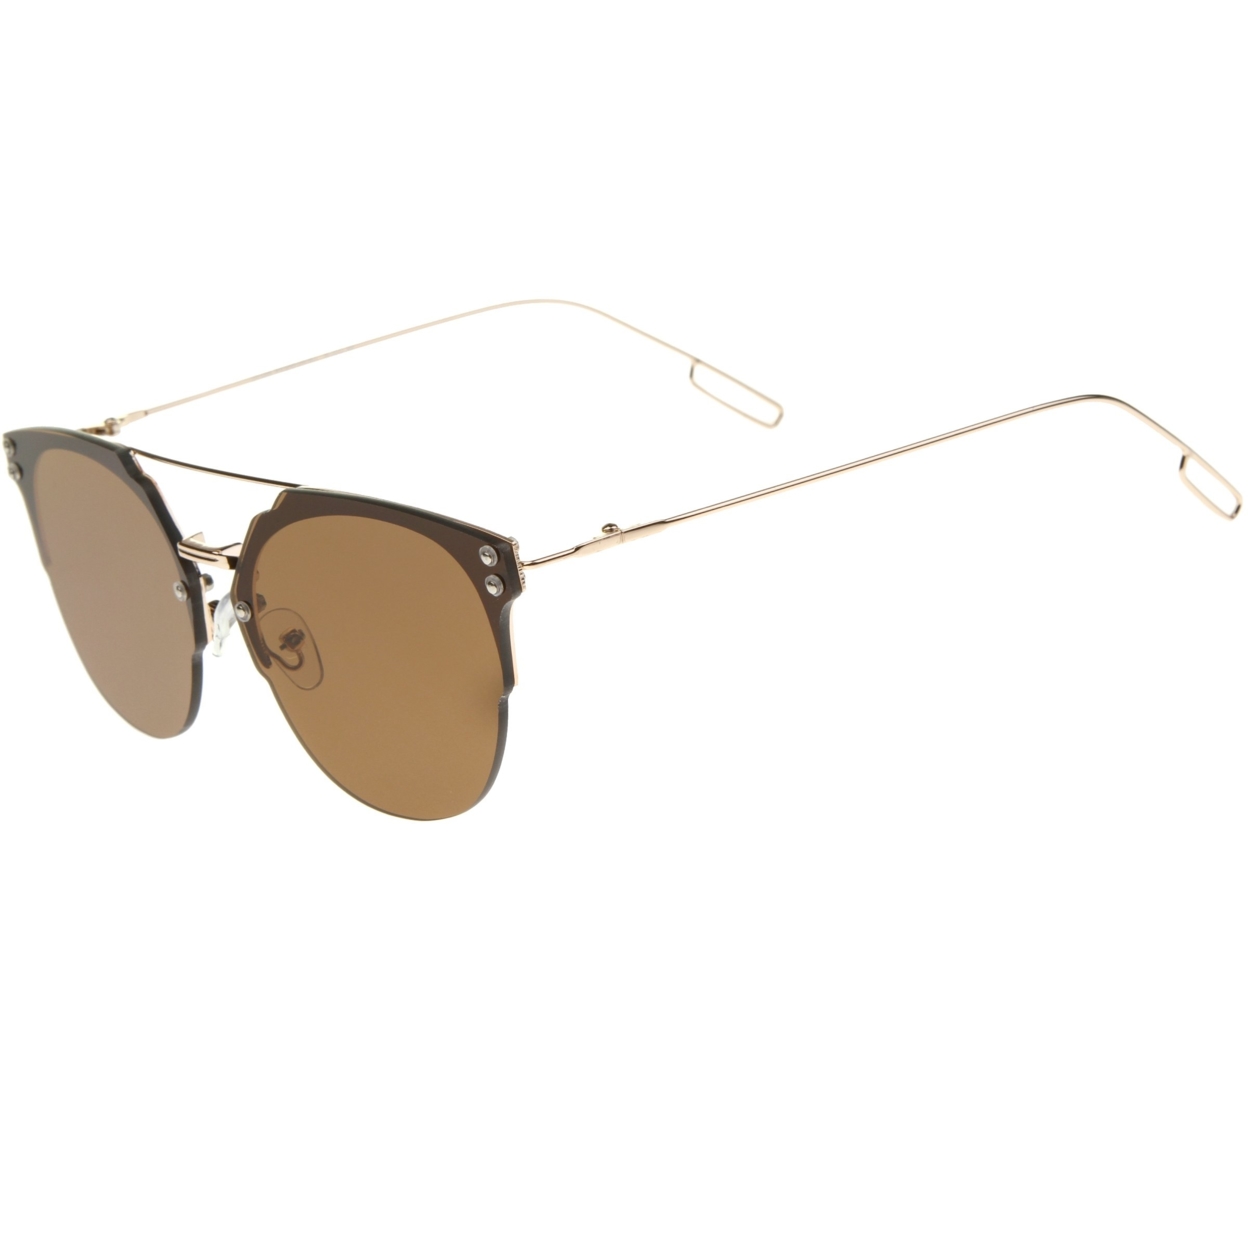 Modern Fashion Ultra Slim Wire Rimless Flat Lens Pantos Sunglasses 58mm - Black-Silver / Smoke